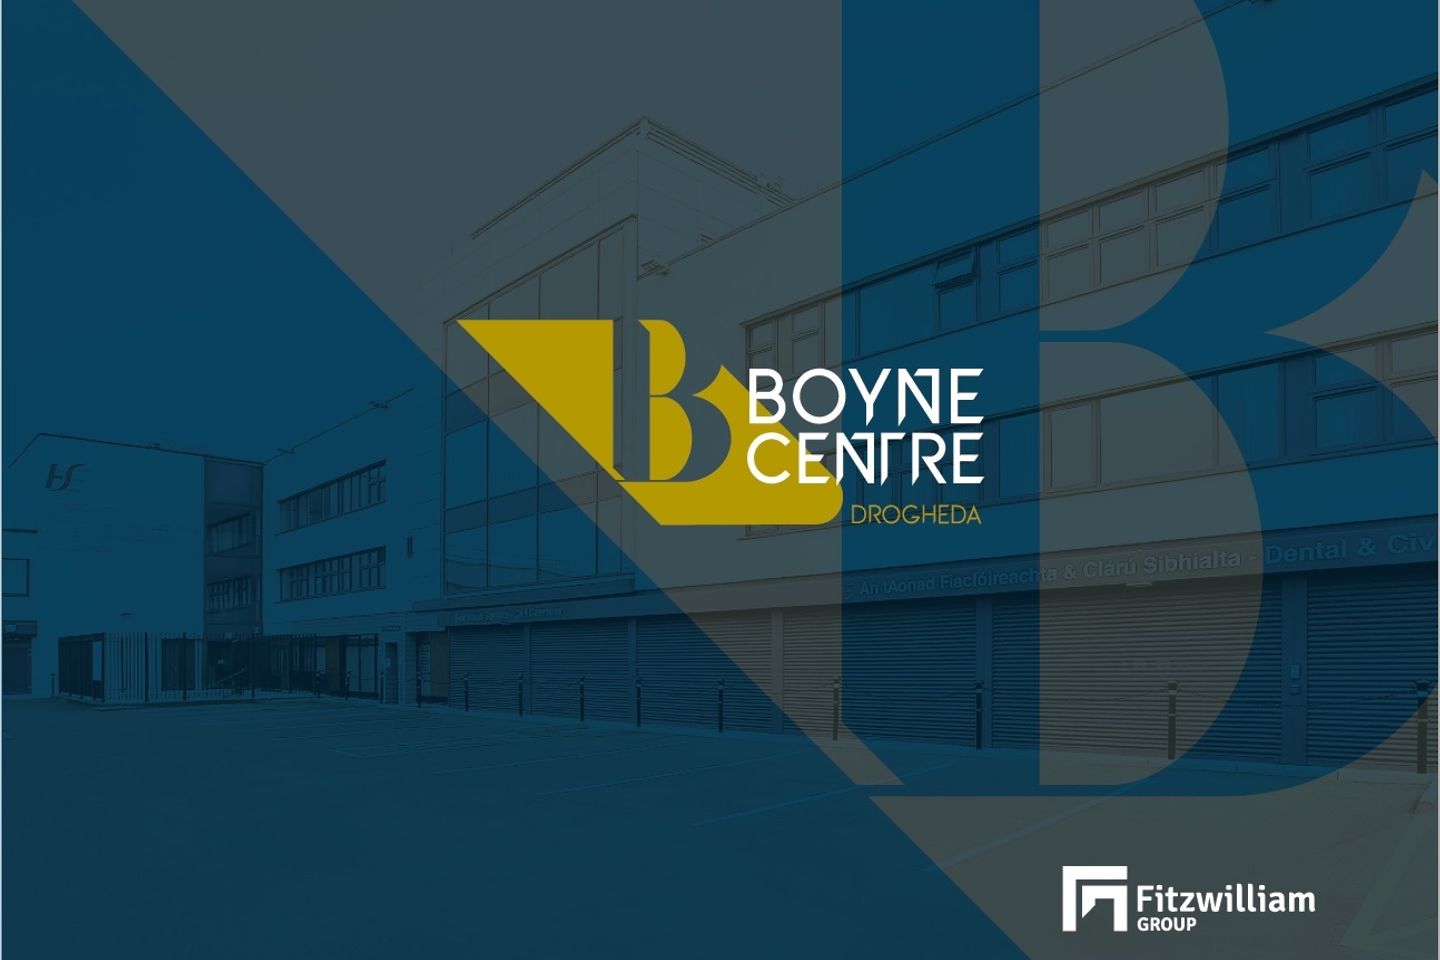 Boyne Centre, Unit 6, Lower Ground Floor, Drogheda, Co. Louth